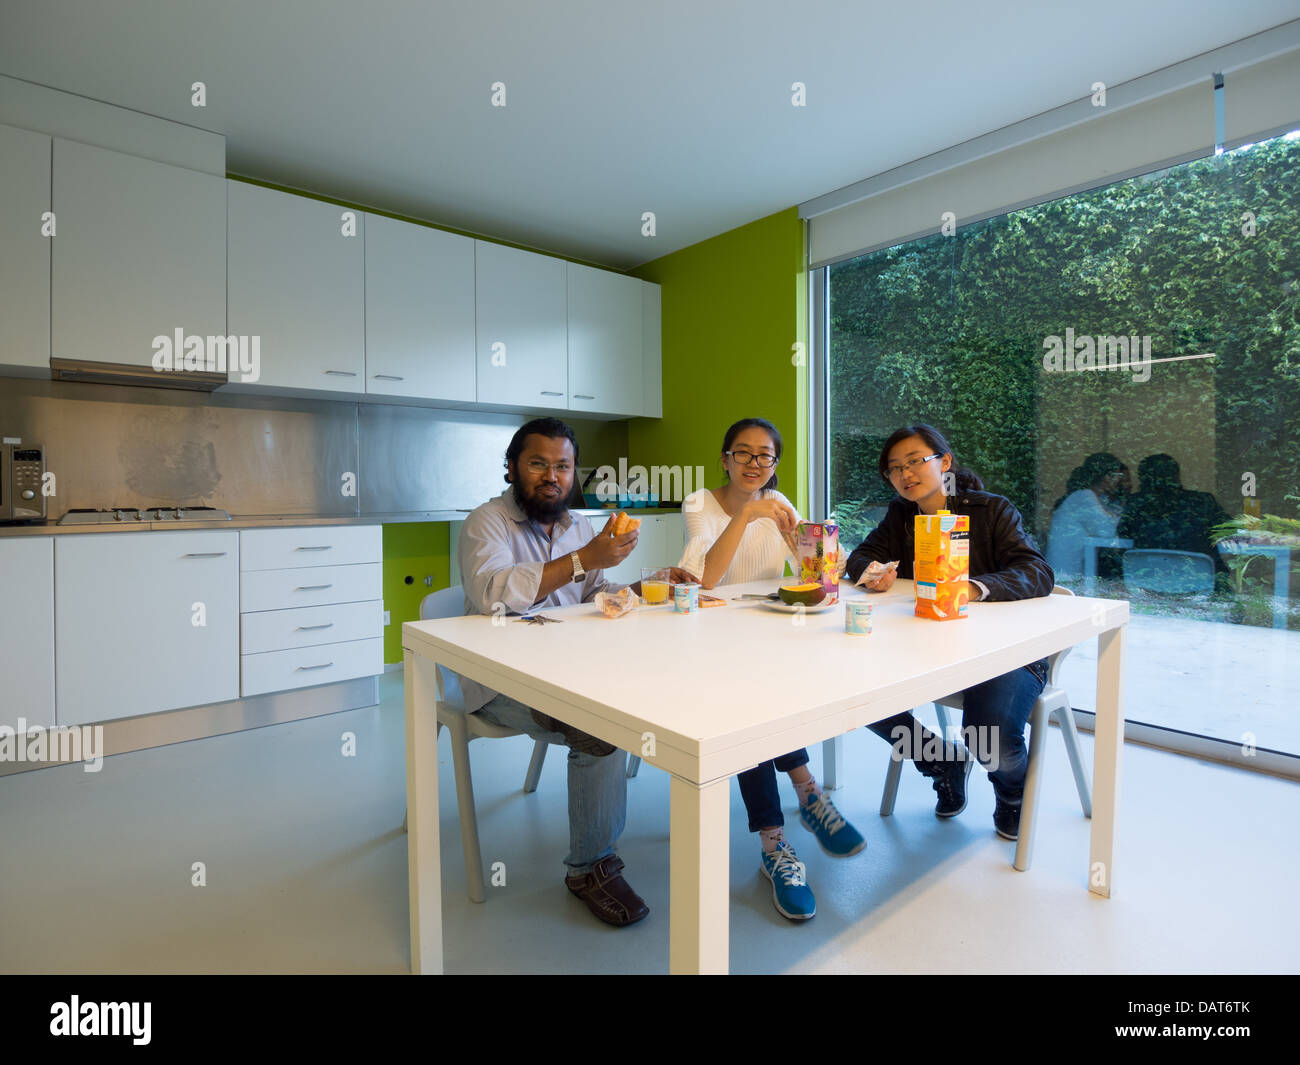 Friends eating breakfast in modern kitchen Stock Photo